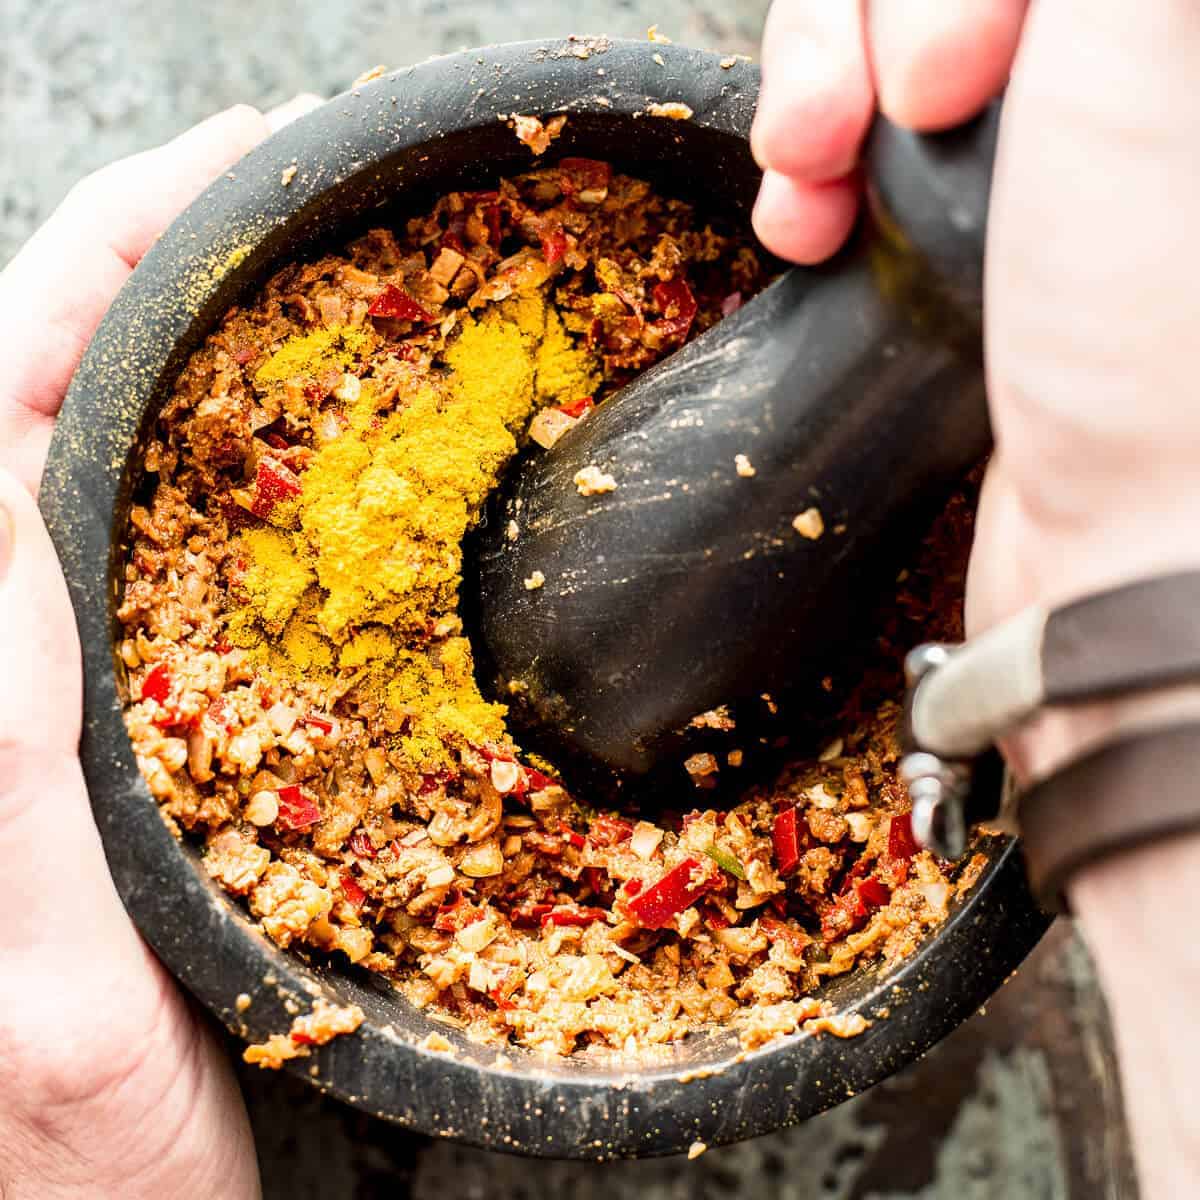 Best Granite Mortar and Pestle: Make Amazing Thai Curry Pastes